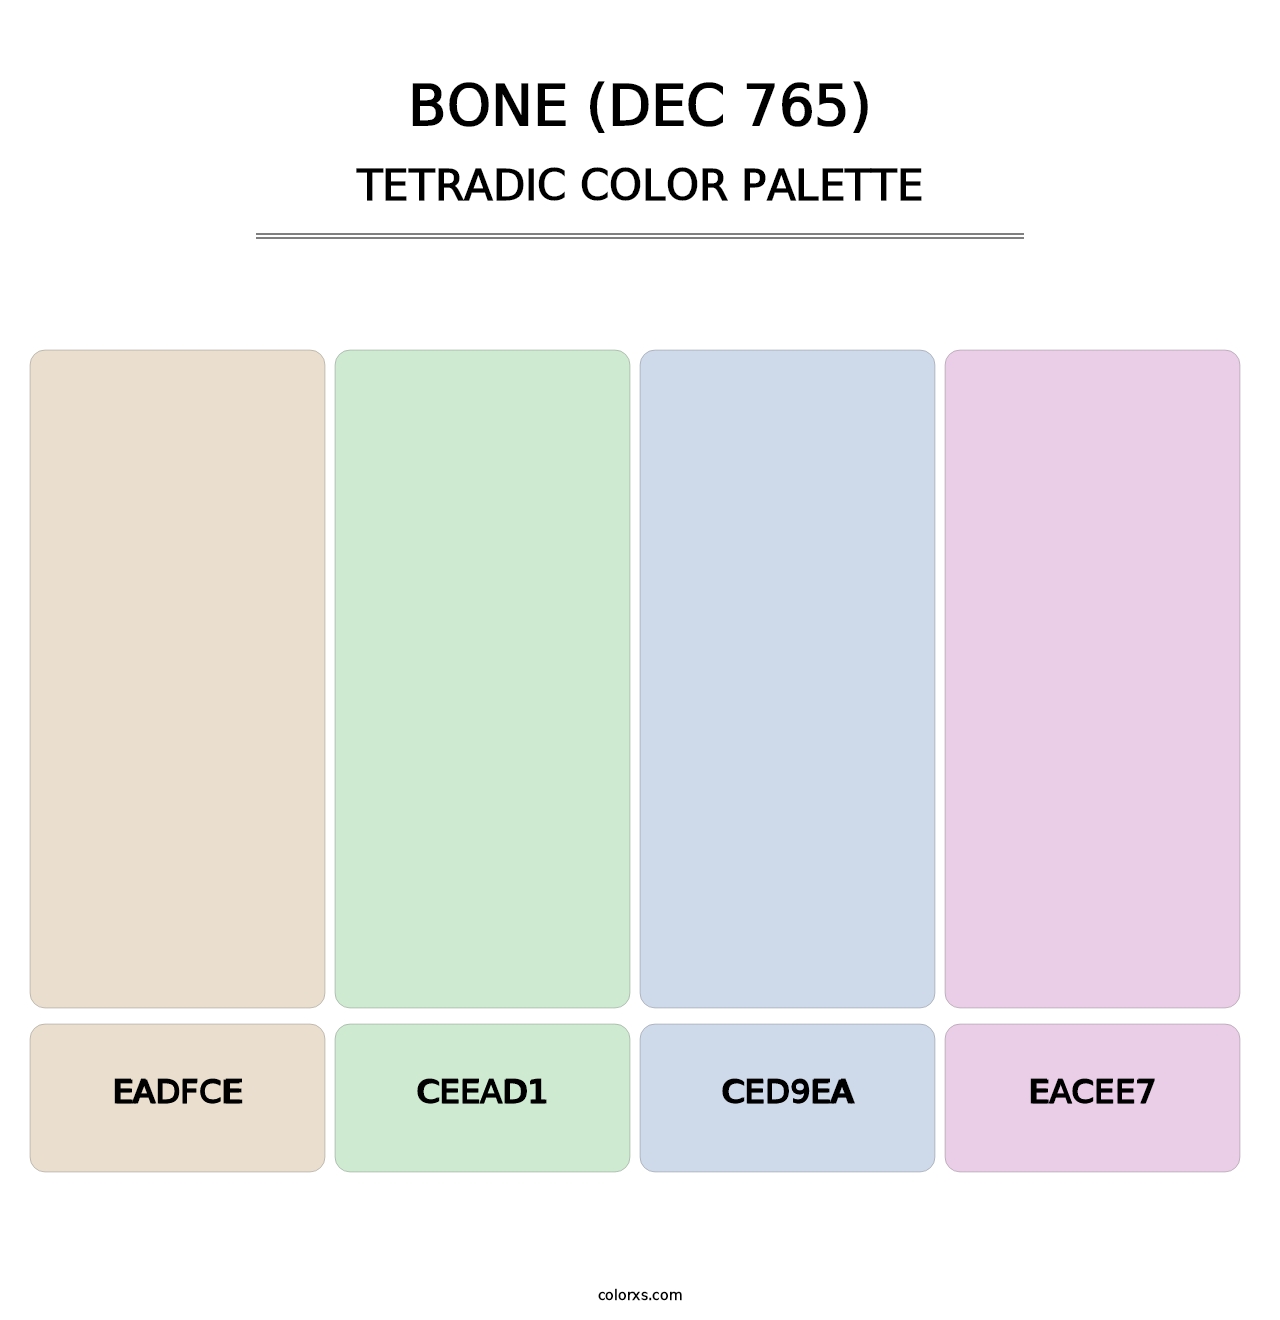 Bone (DEC 765) - Tetradic Color Palette